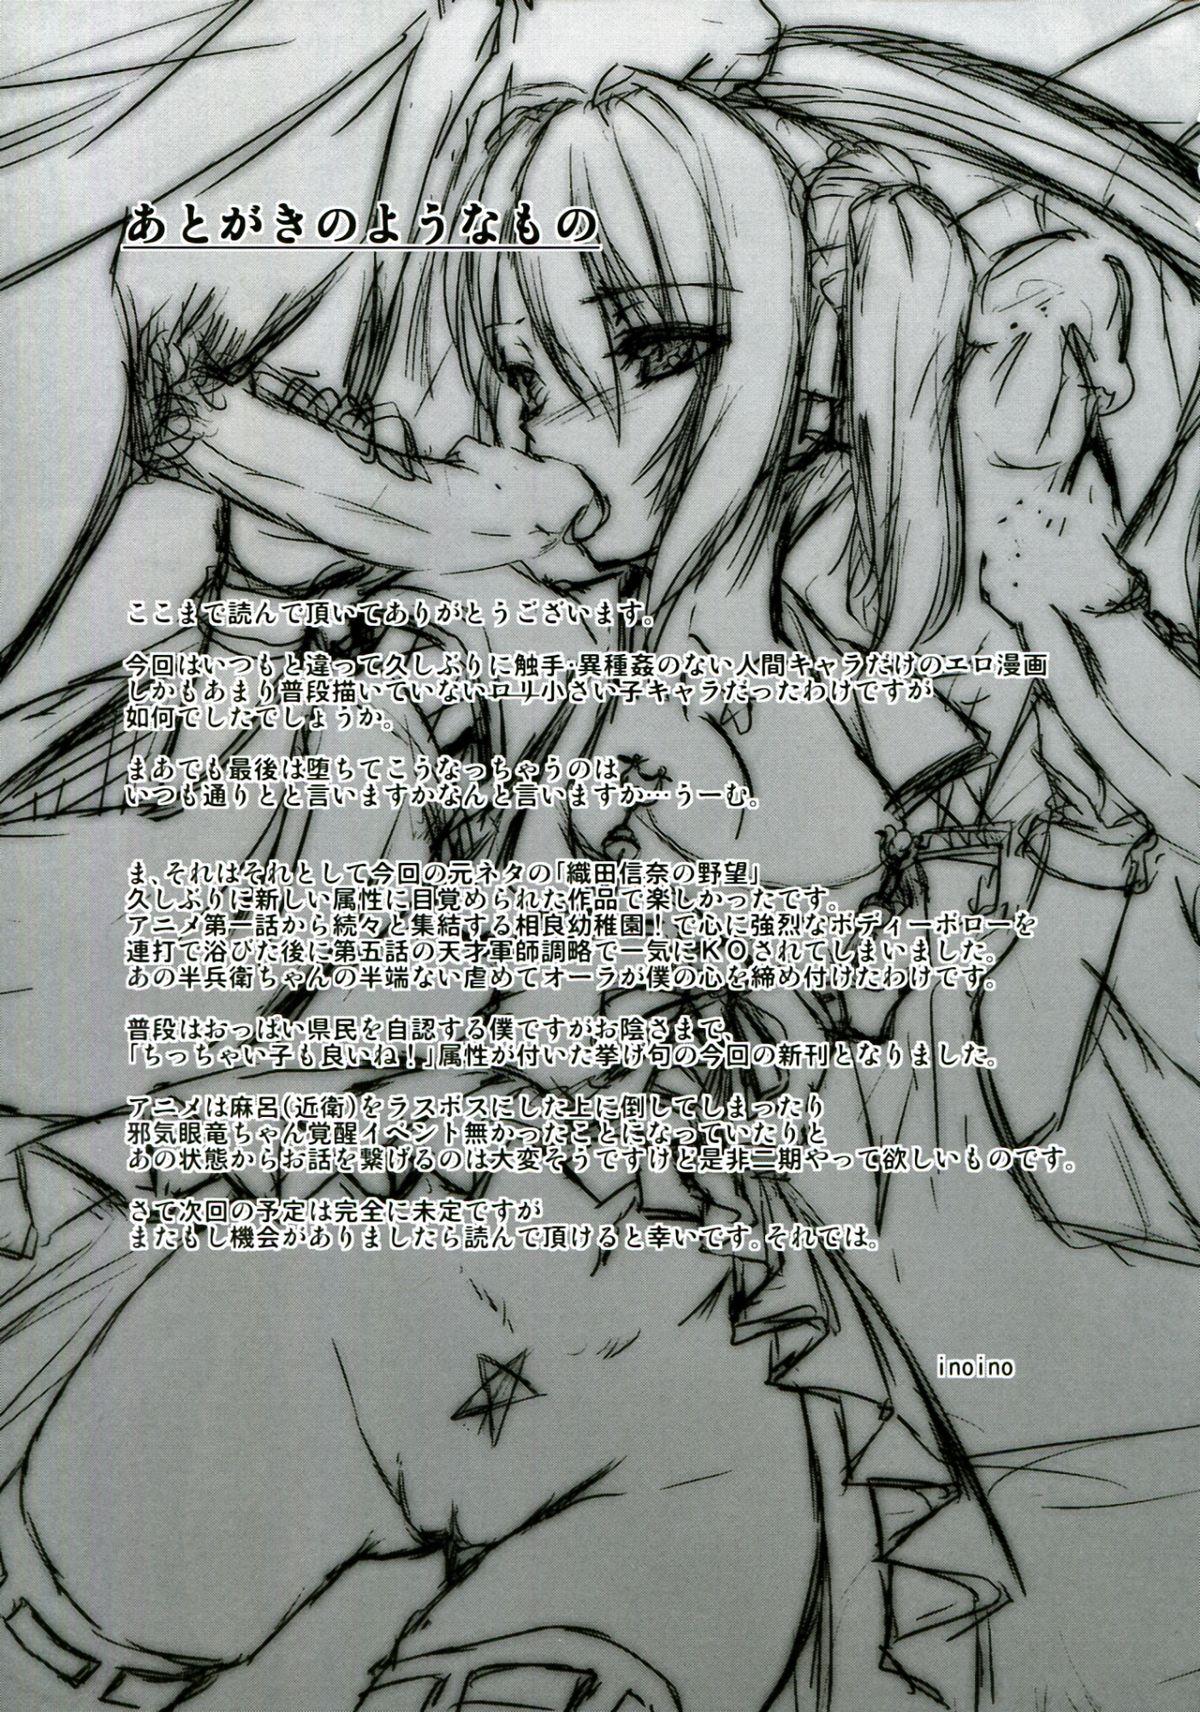 Analplay Shinsan Kibou - Oda nobuna no yabou Italiana - Page 29